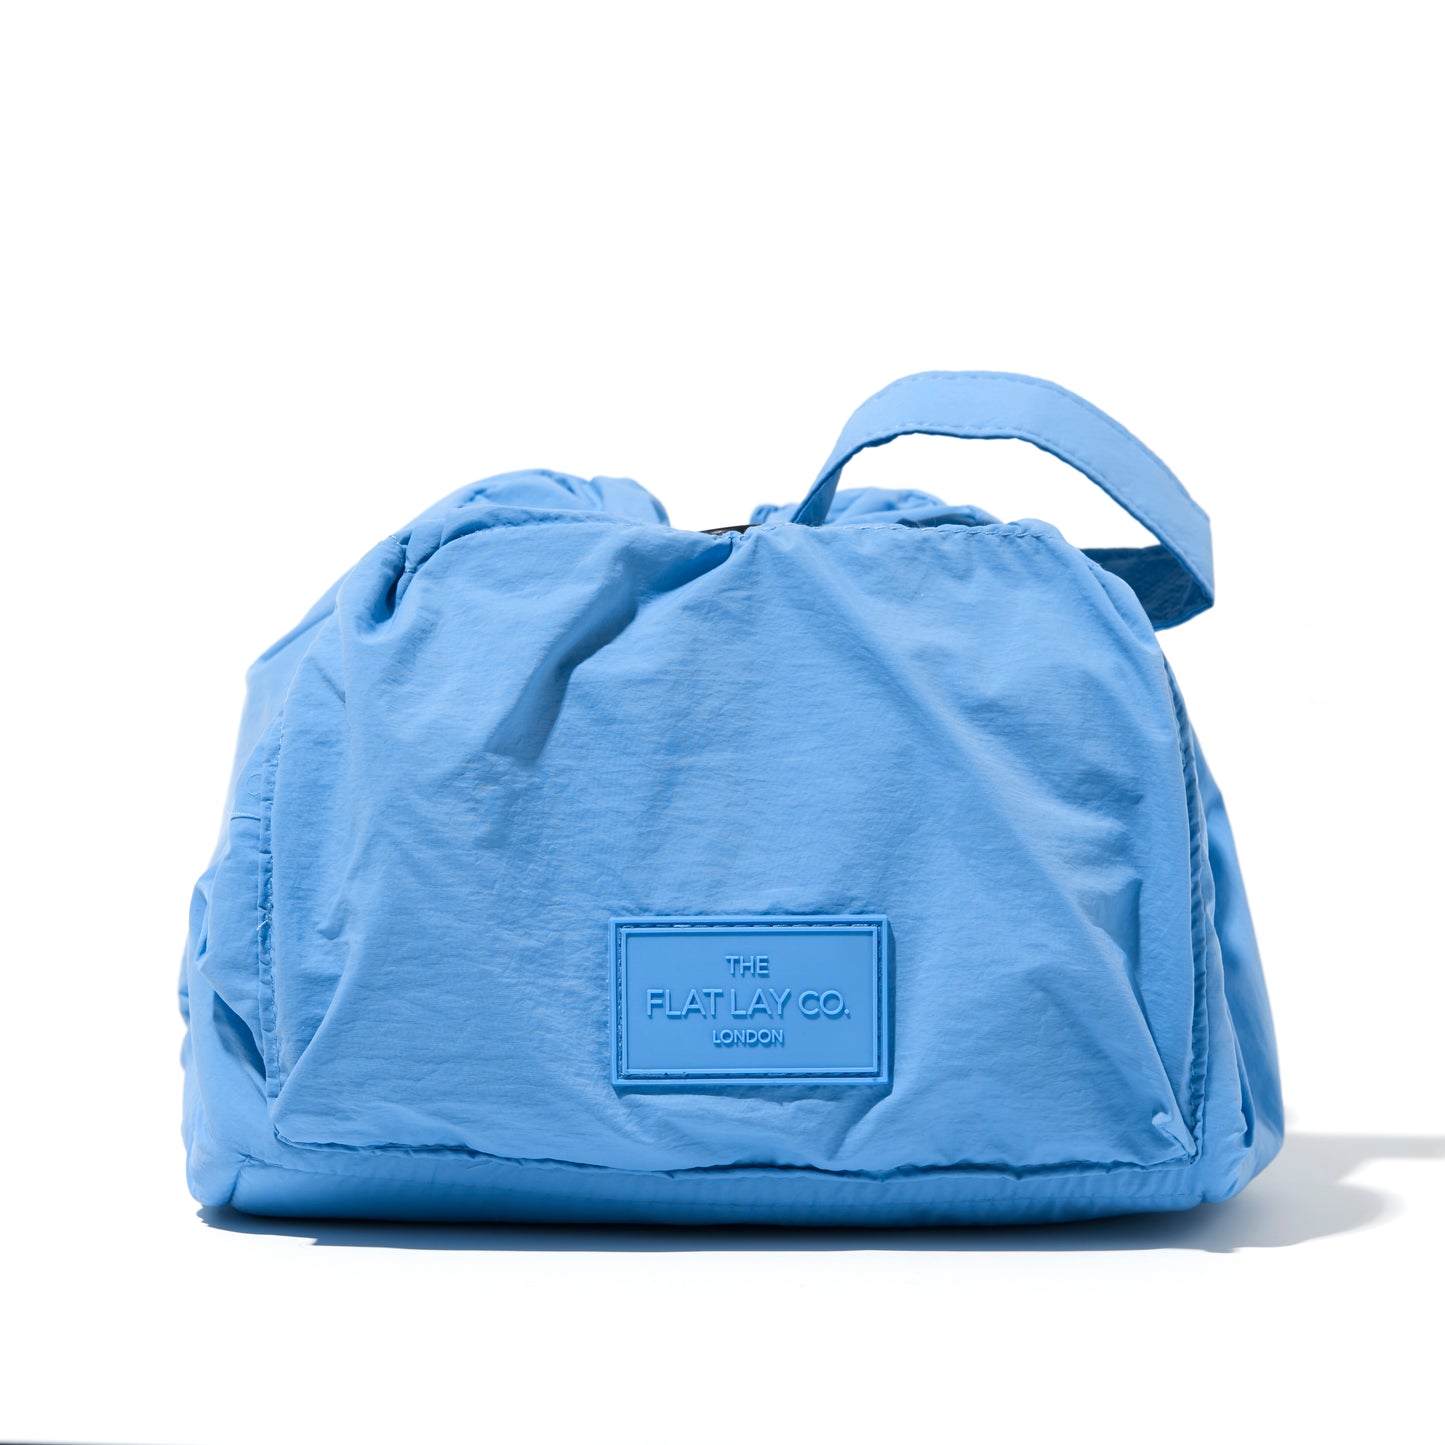 The Flat Lay Co. Drawstring Makeup Bag in Blue Parachute